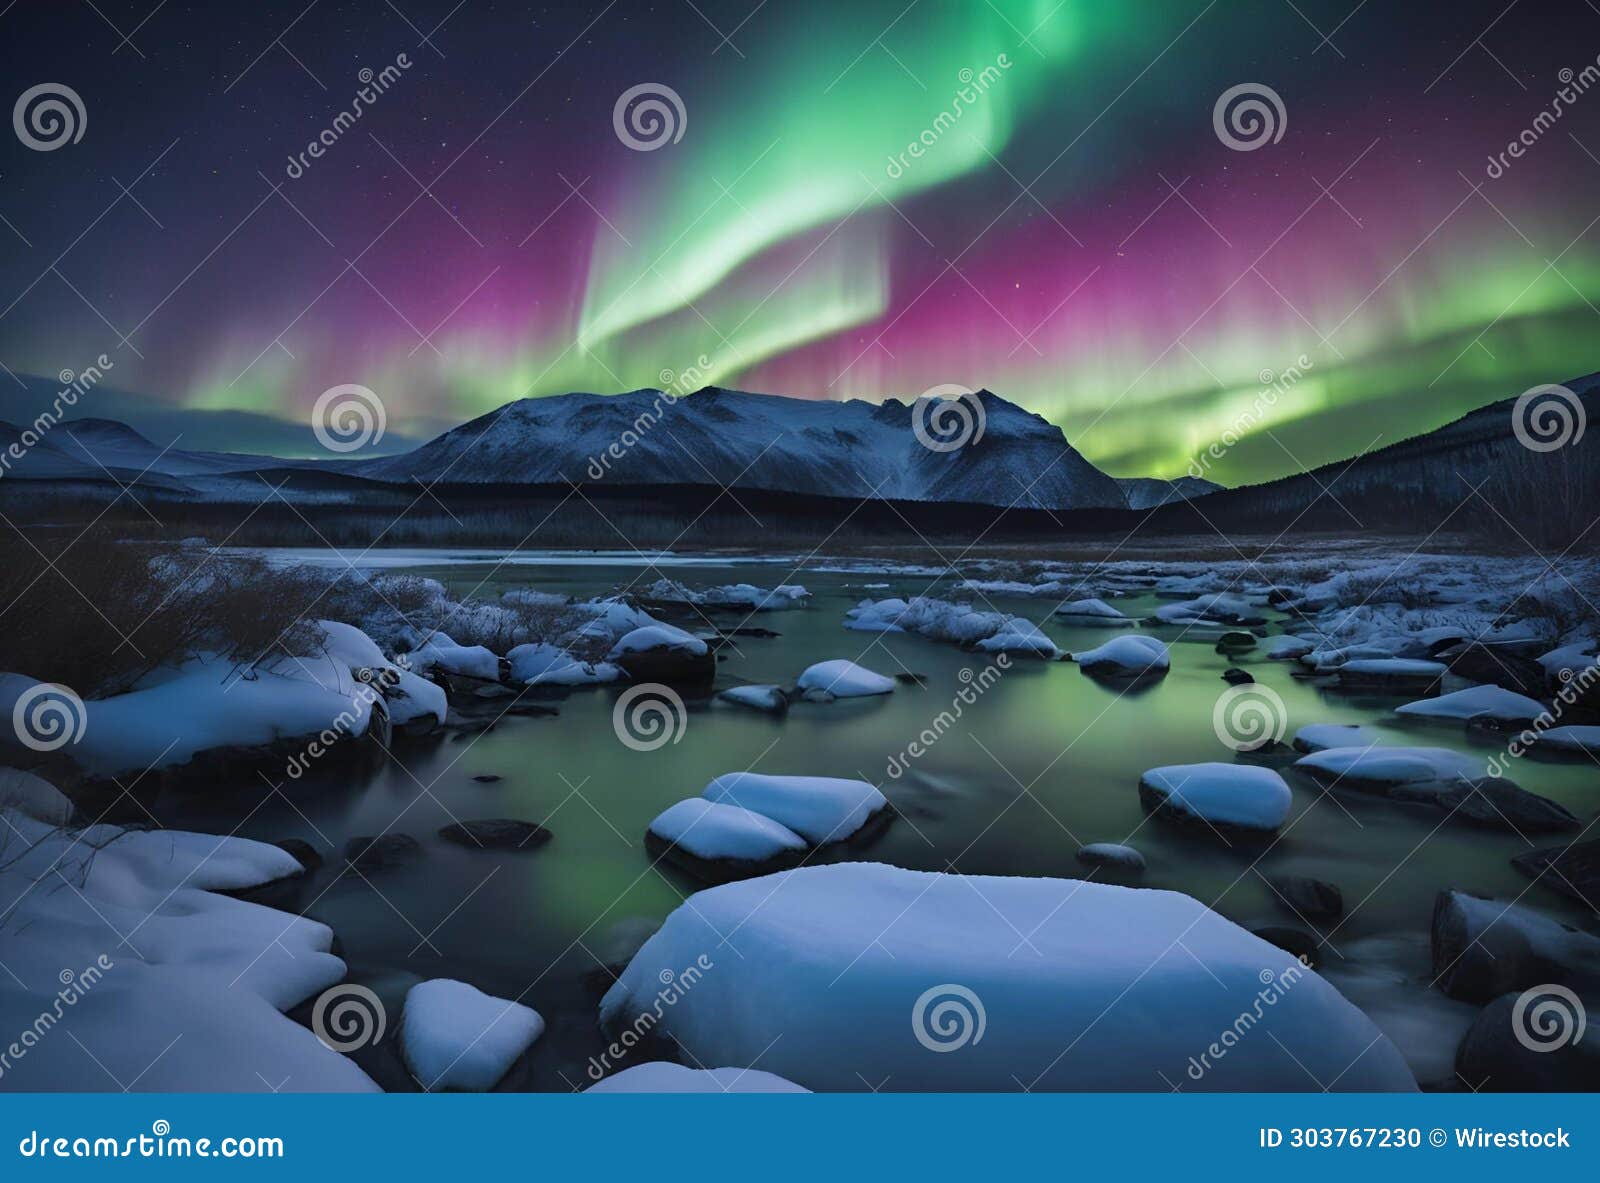 AI Generated Illustration of a Breathtaking Aurora Borealis in Lofoten ...